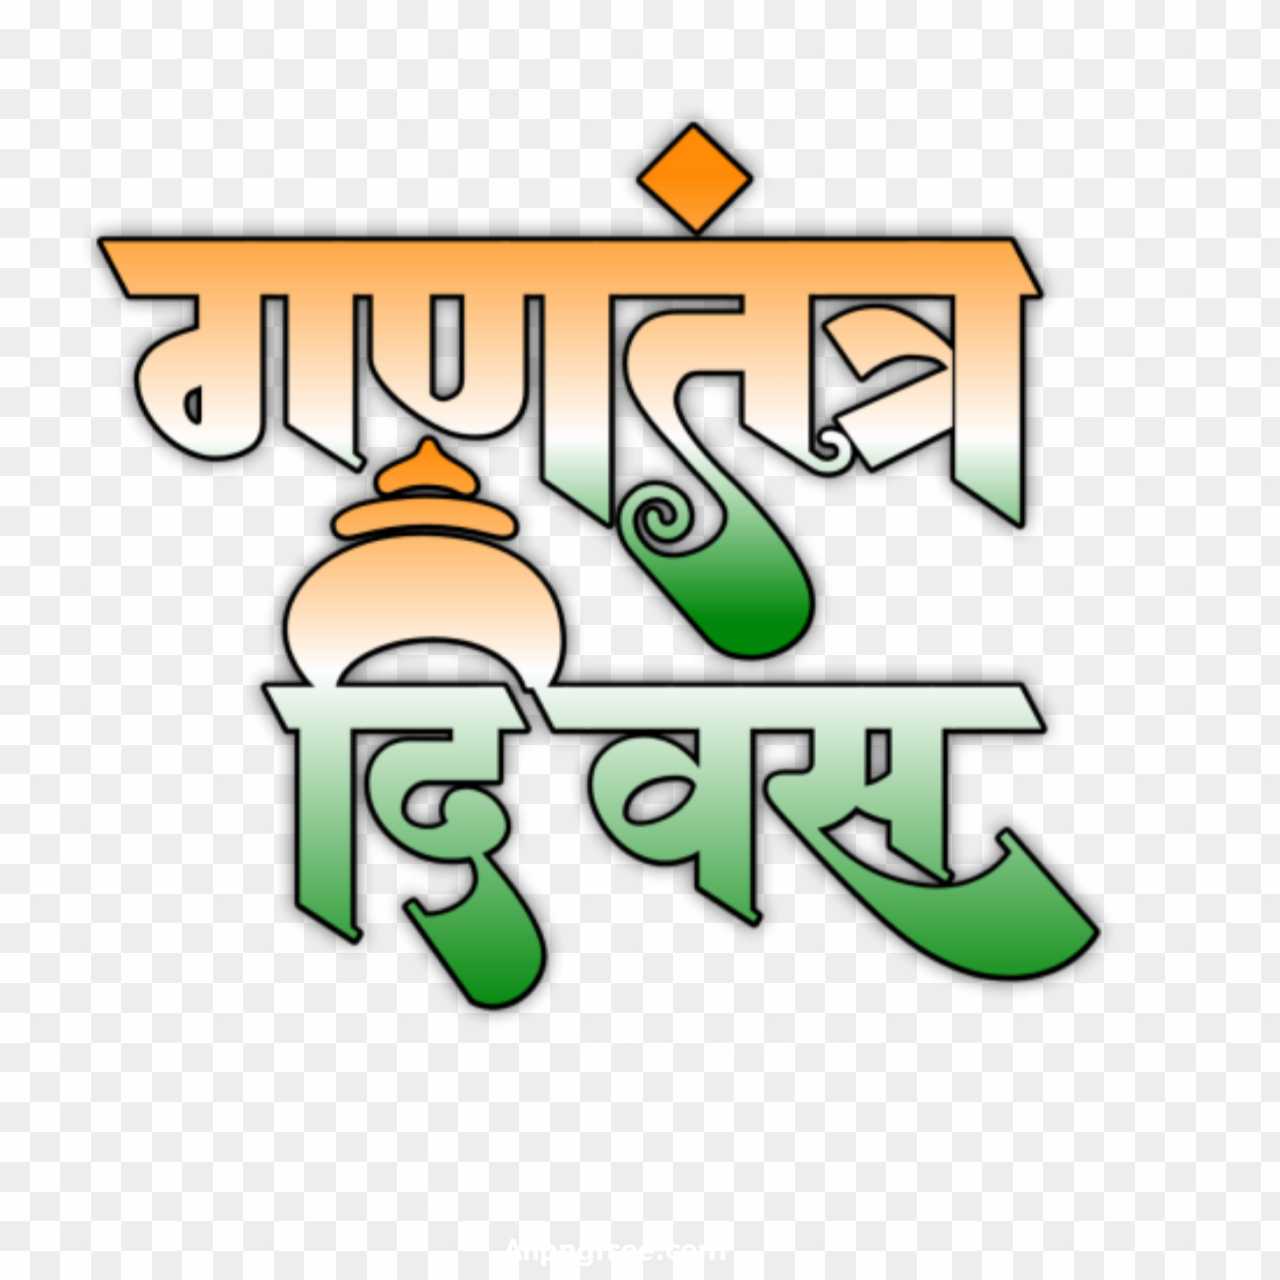 Happy Republic Day in Hindi ganatantrata Divas text PNG transparent image